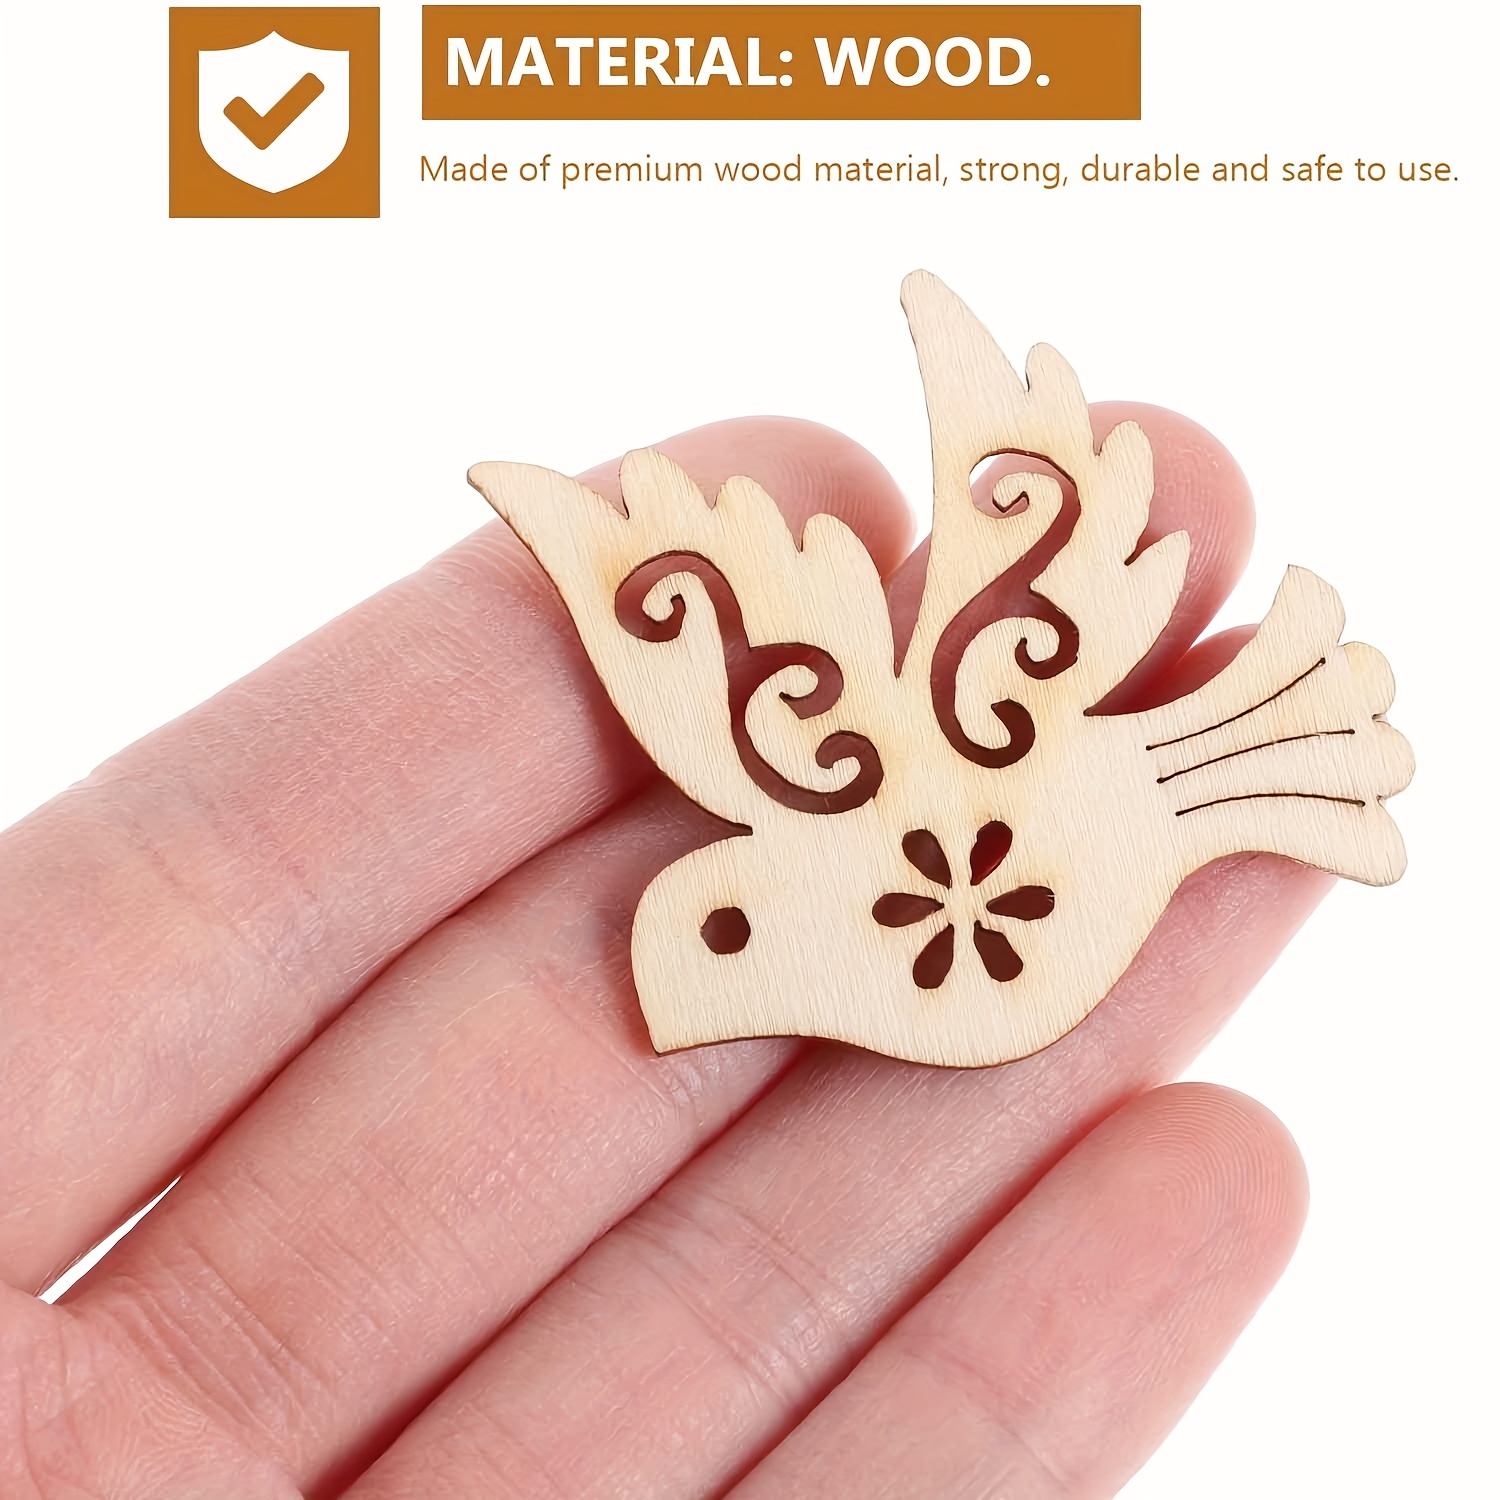 Wooden Crafts, Wooden Shapes, Wooden Cutouts, Wooden Diy Materials